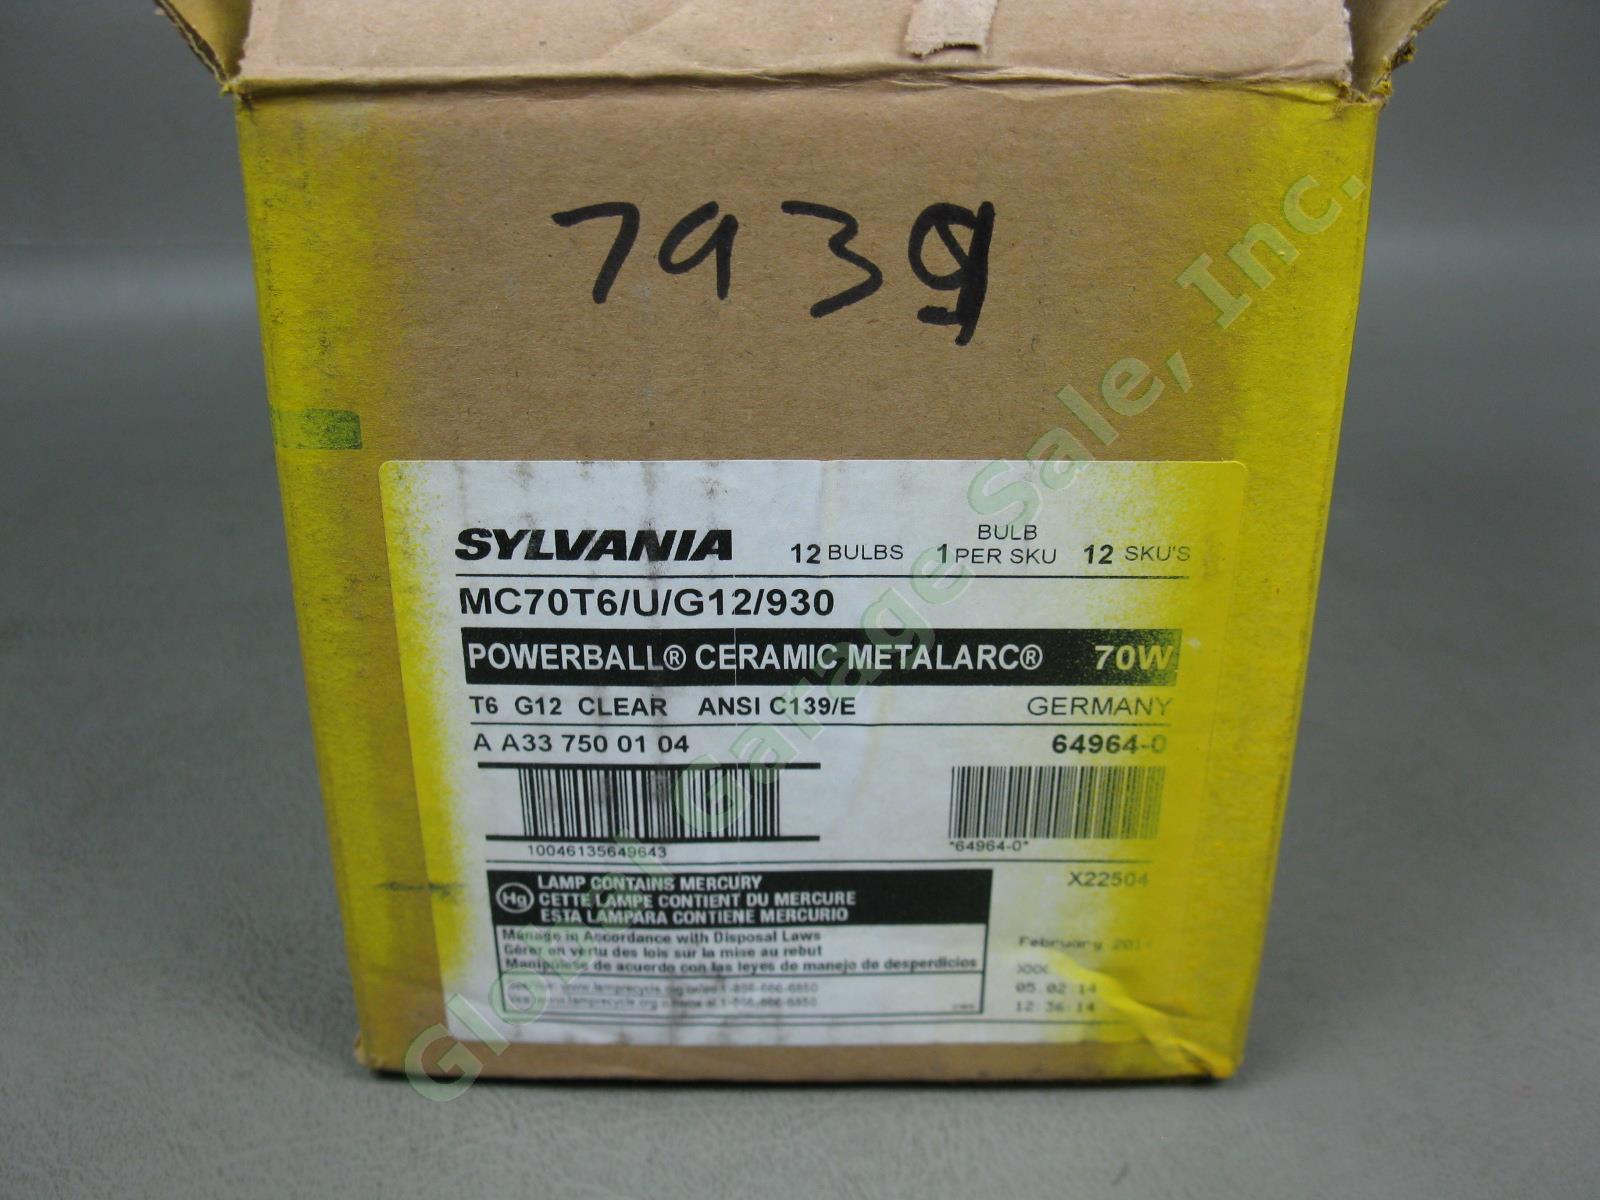 96 NEW NIB Sylvania MC70T6/U/G12/830 70W Powerball Clear Ceramic Metalarc Lamps 1